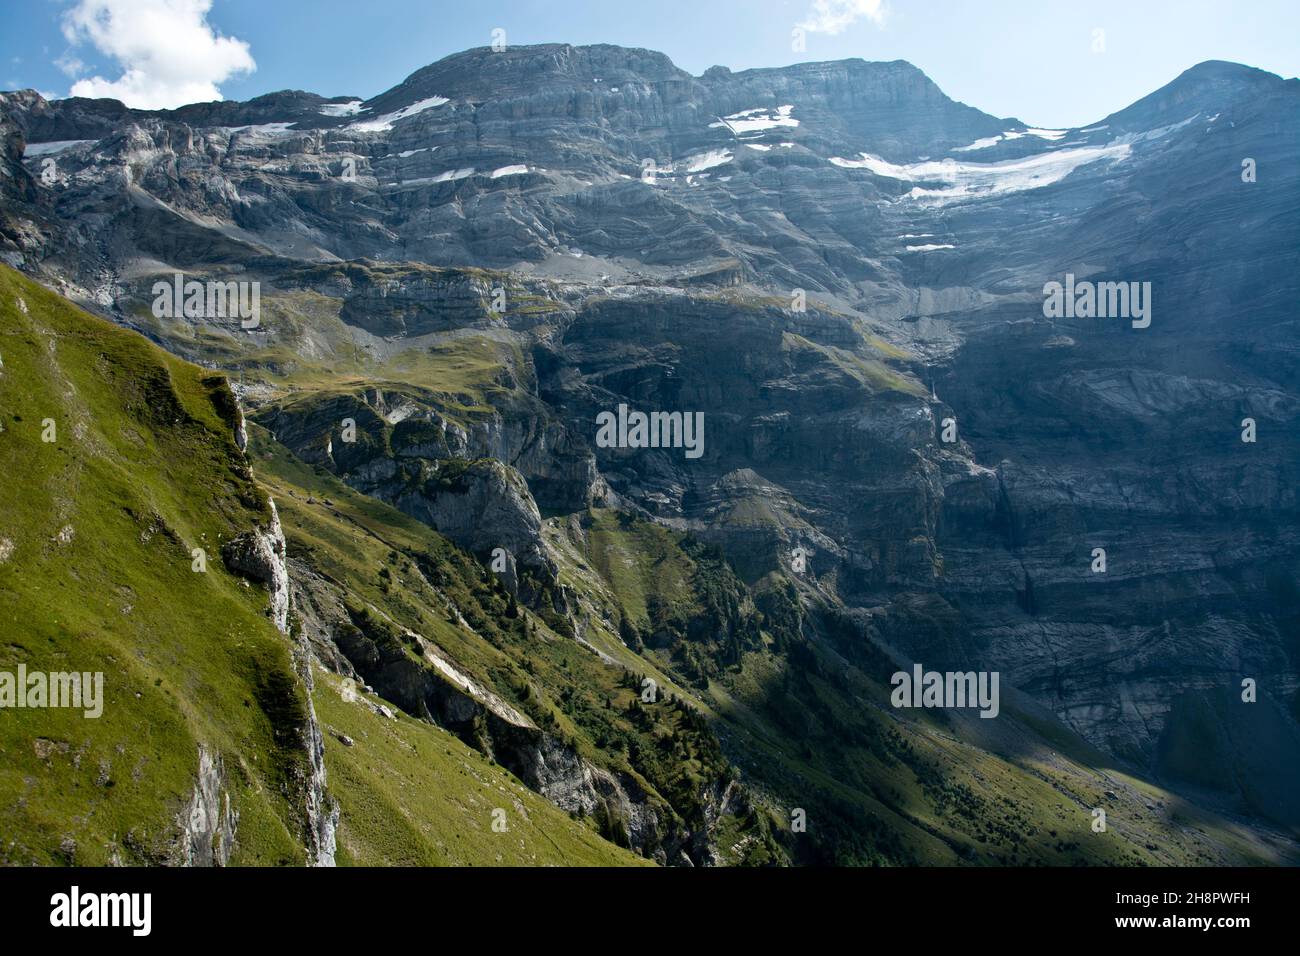 Blick in den Creux de Champ, ein imposanter Talkessel oberhalb von Les Diablerets in den Waadtländer Alpen, Schweiz Foto Stock